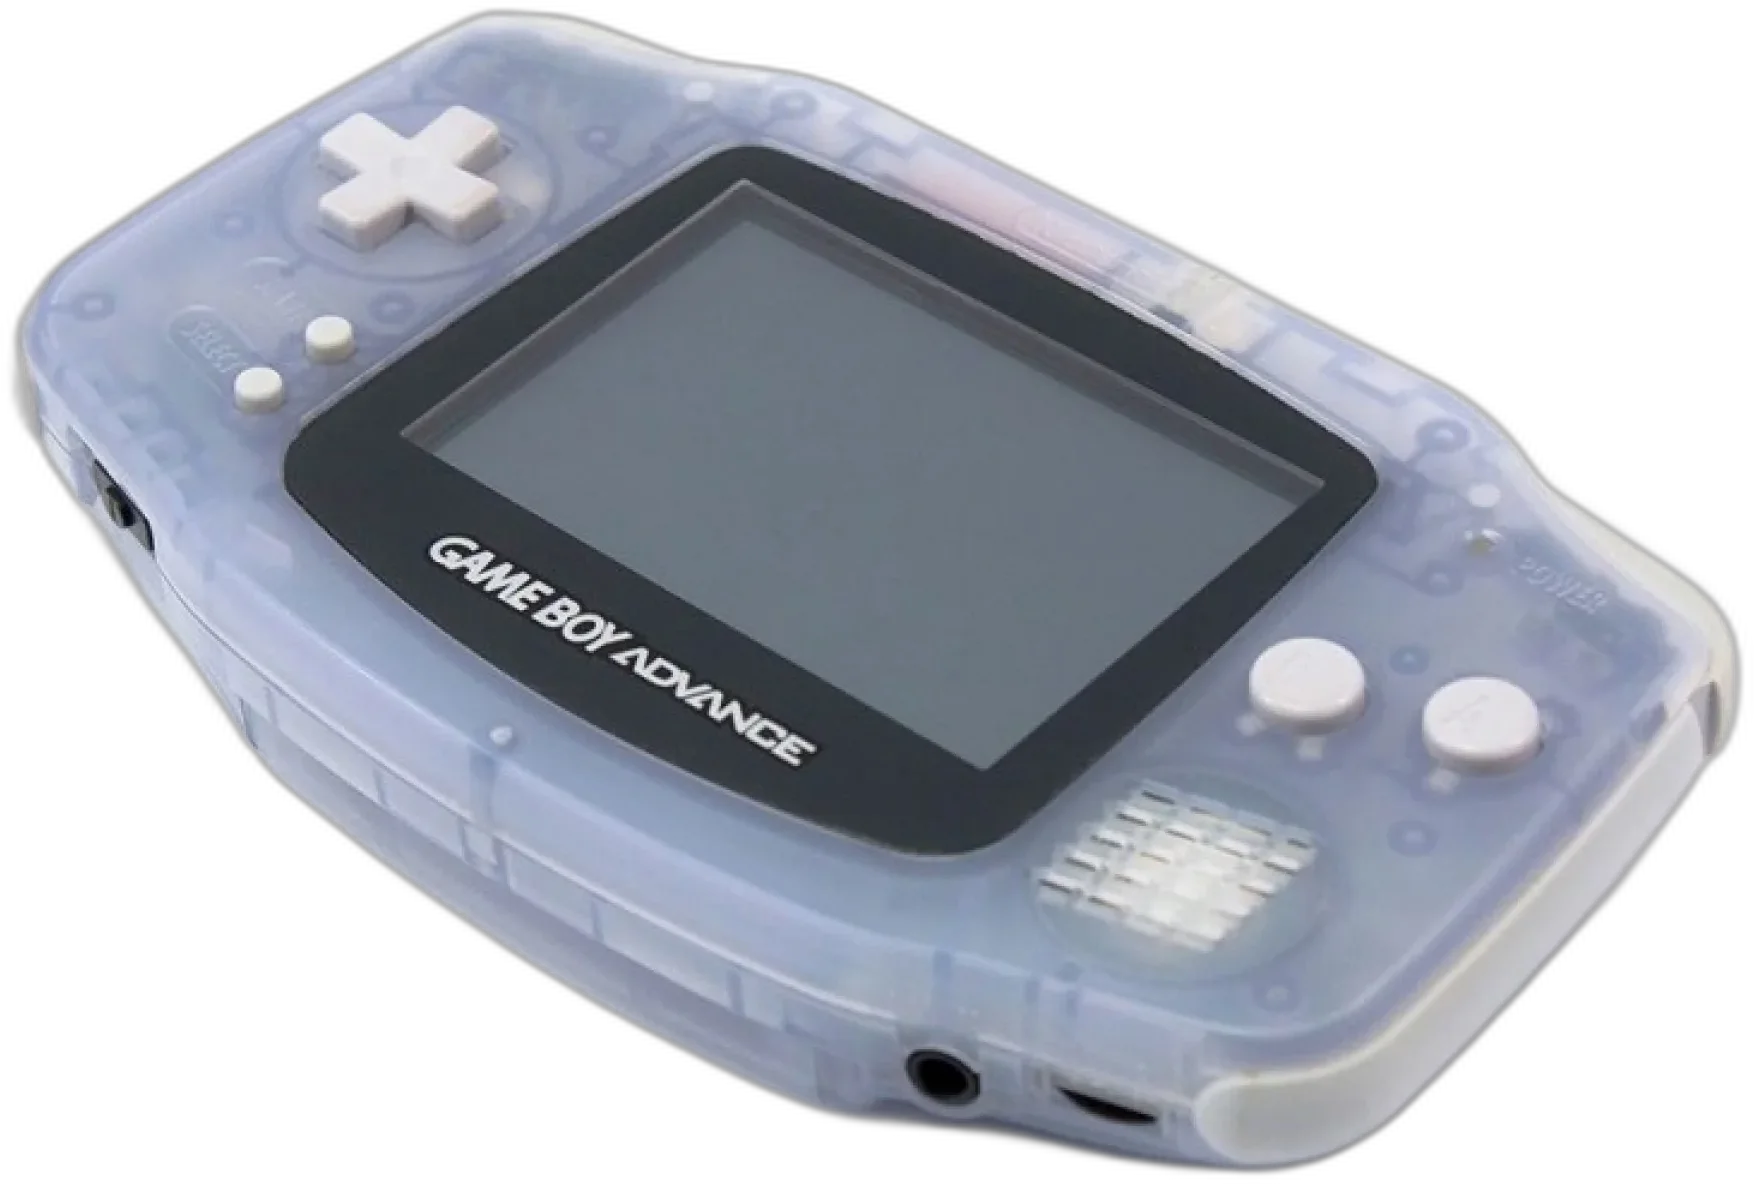  Nintendo Game Boy Advance Glacier Console [AUS]